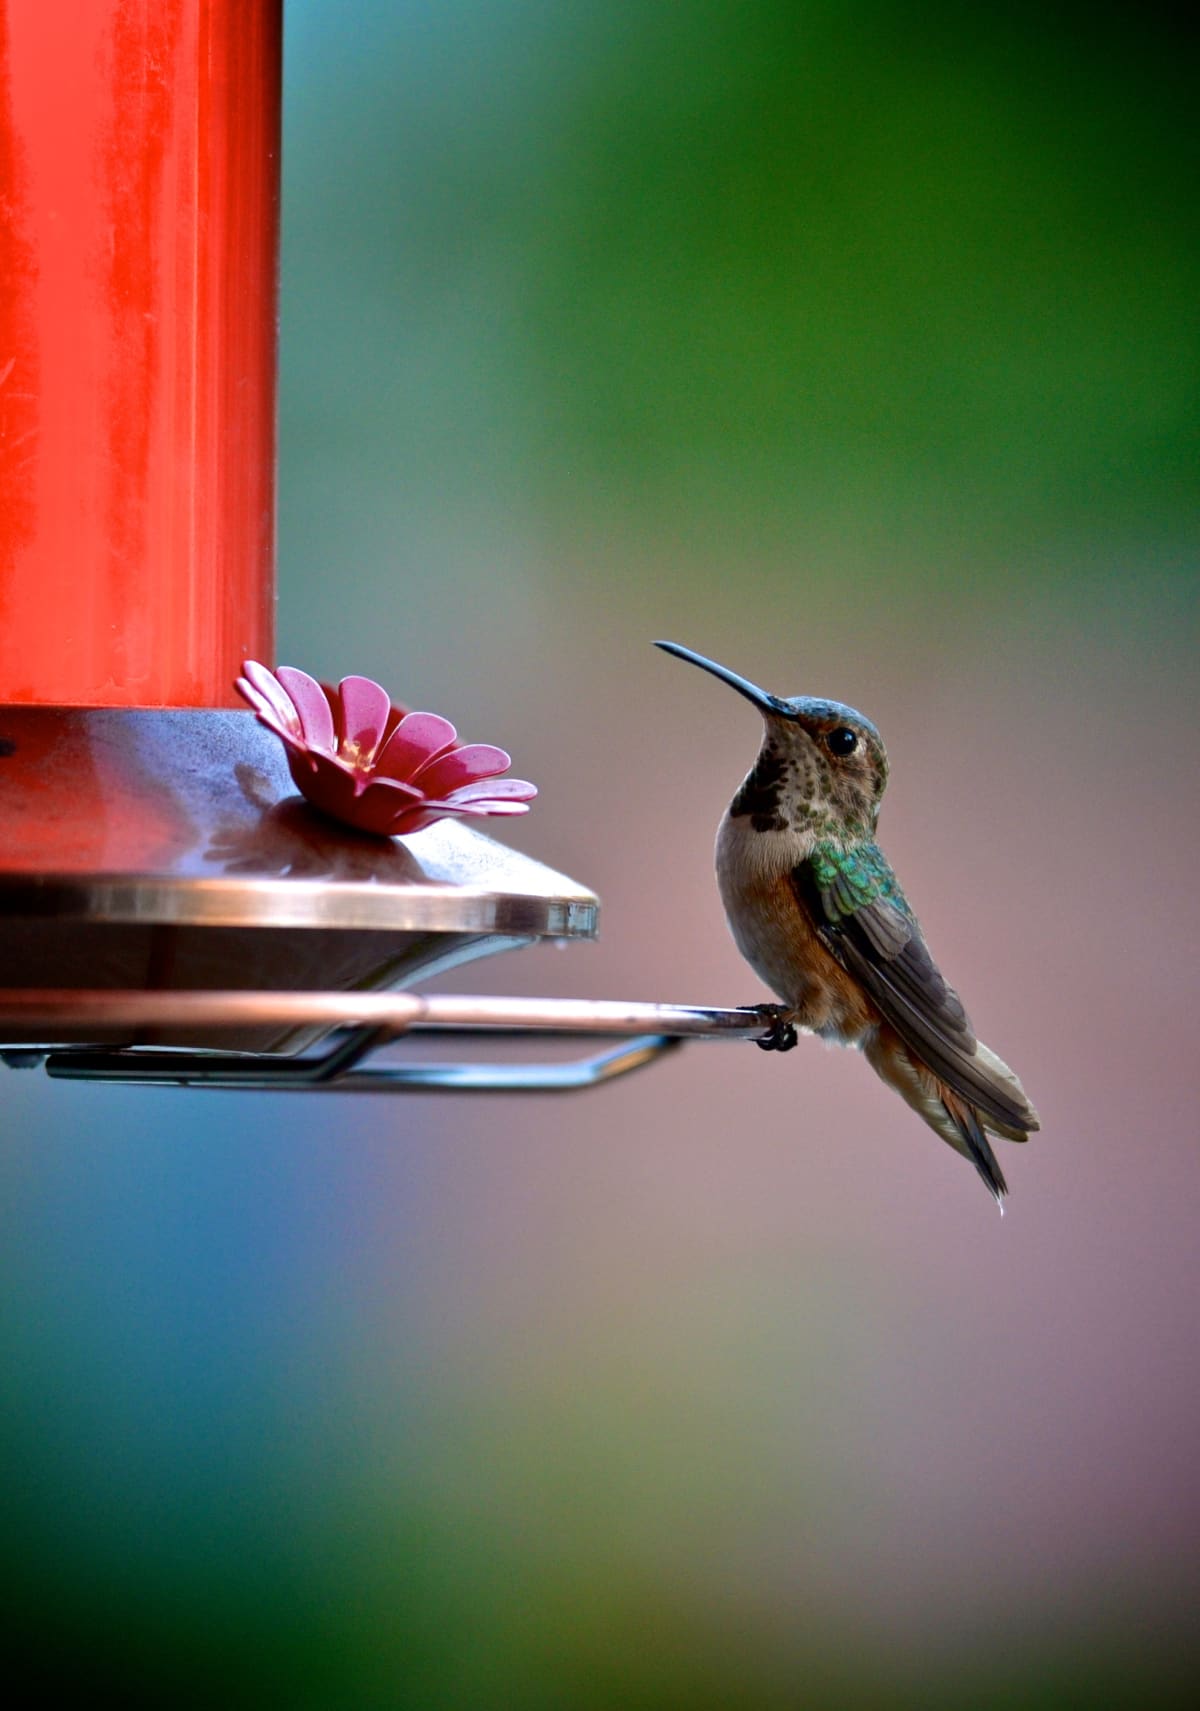 Hummingbird enjoying sugar water from a red bird feeder in rural Minnesota